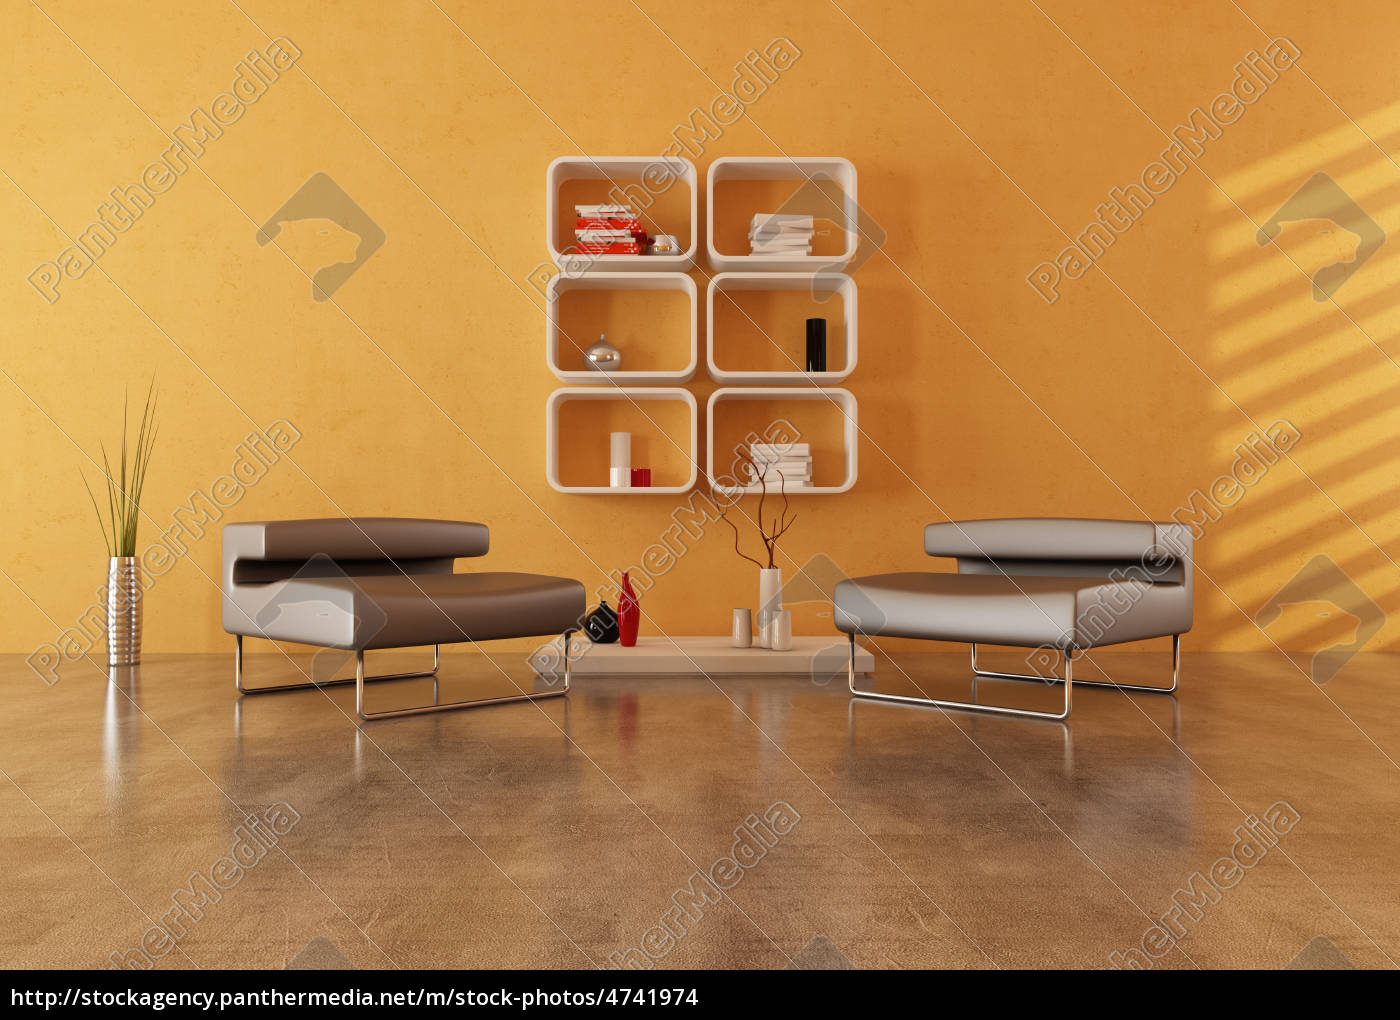 Minimalist Orange And Brown Interior Royalty Free Image 4741974 Panthermedia Stock Agency